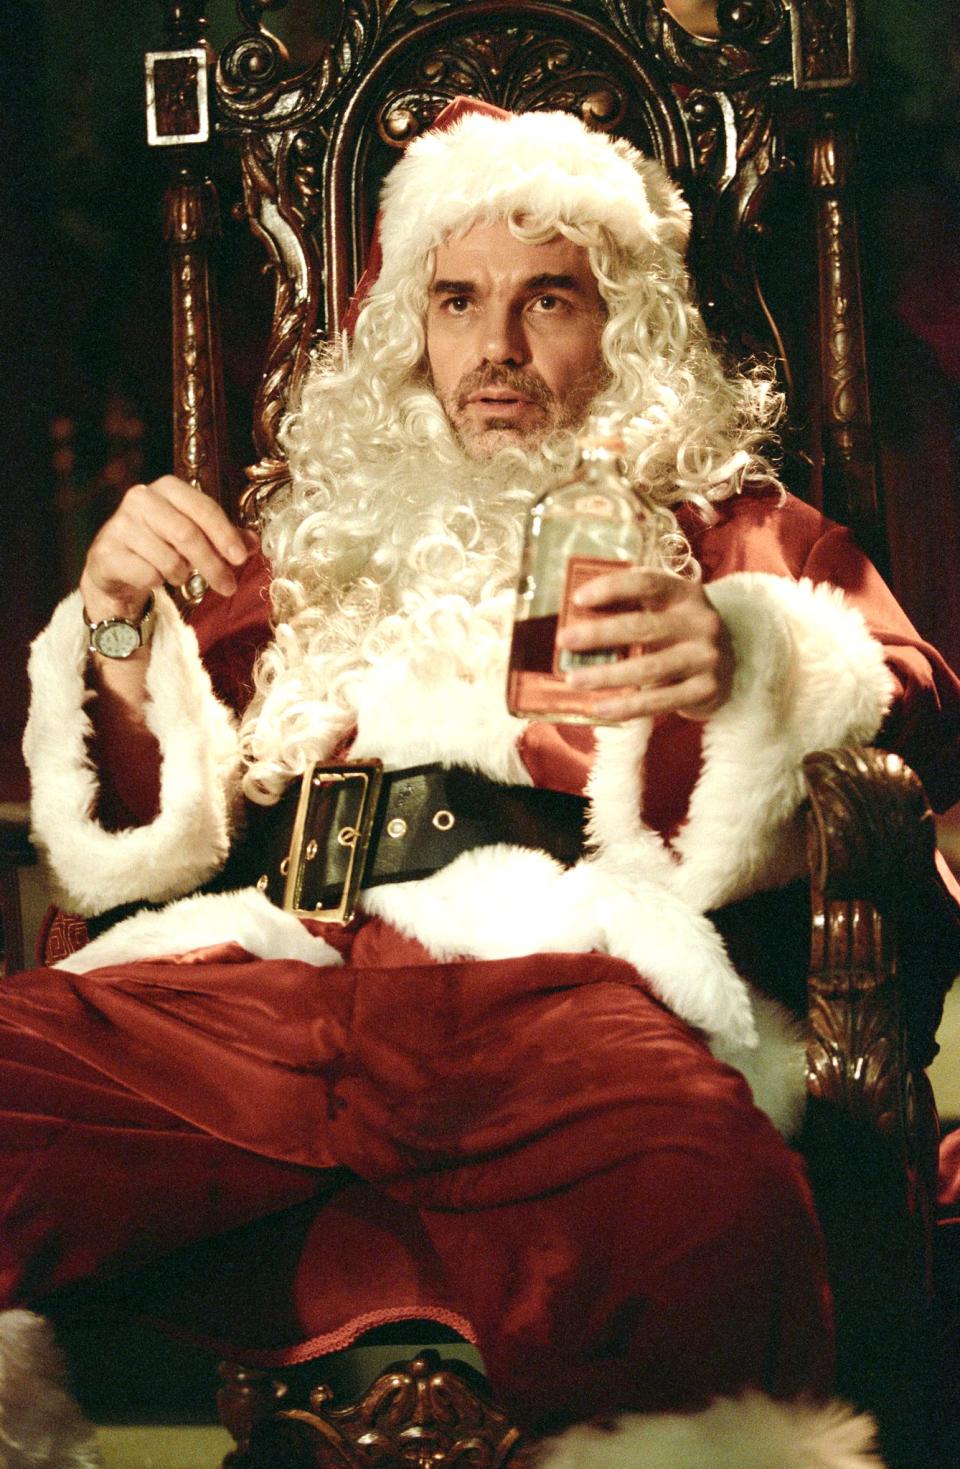 Billy Bob Thornton in "Bad Santa" (2003).